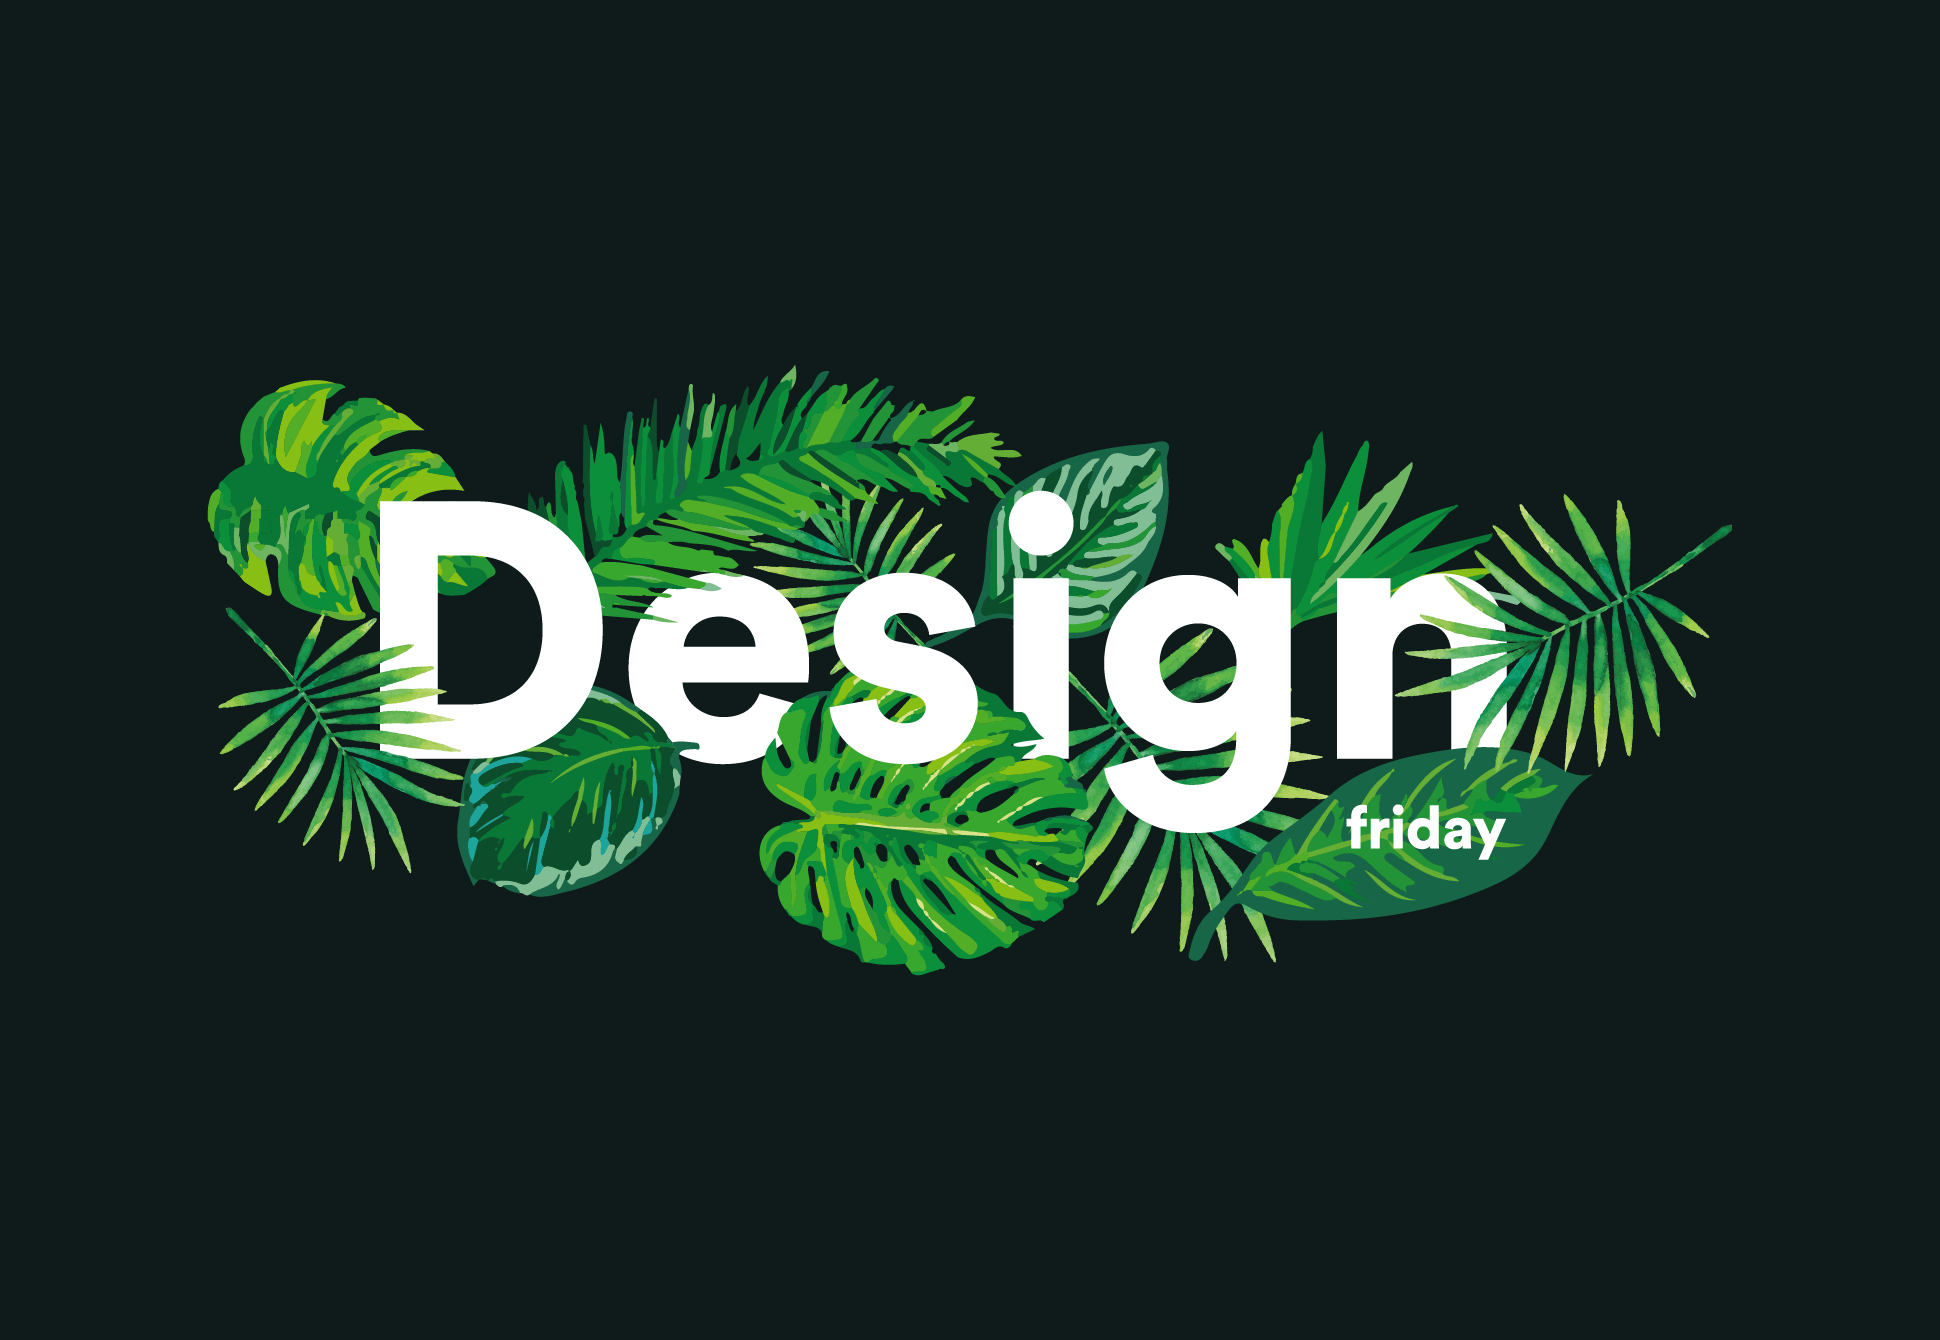 Design Friday Graphic